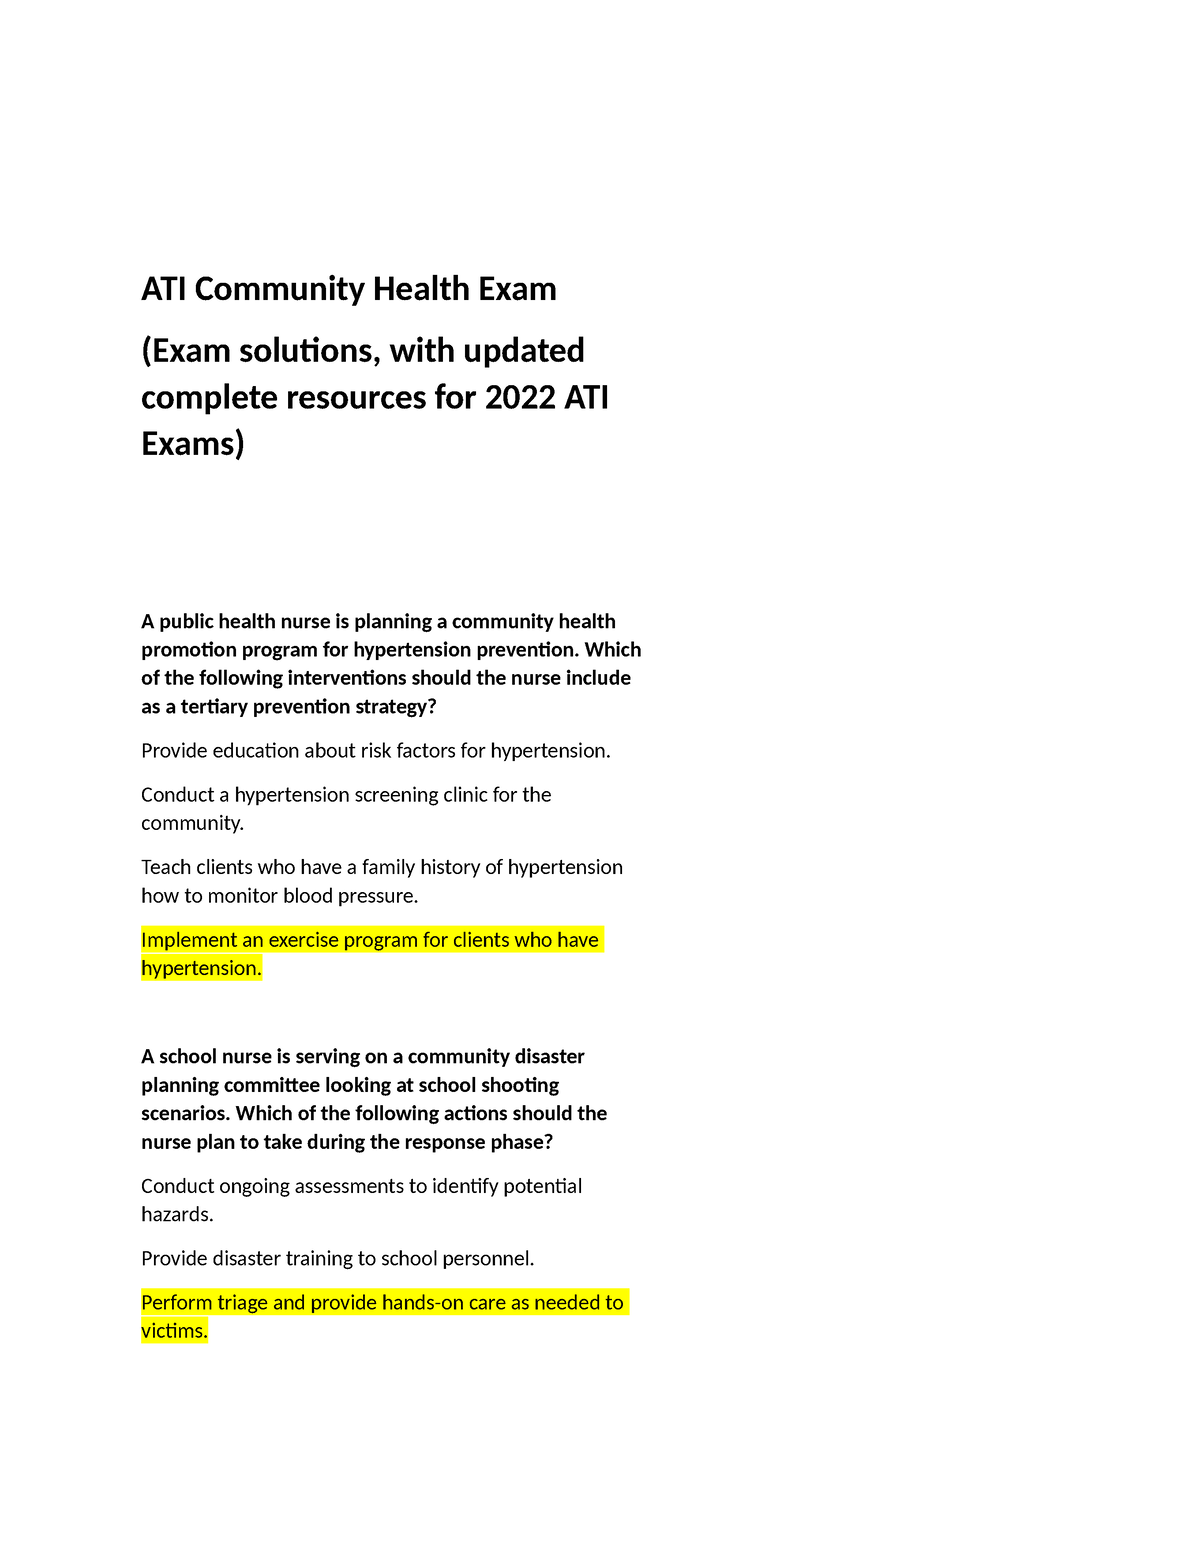 ATI RN Community Health Proctored Exam 2022 ATI Community Health Exam